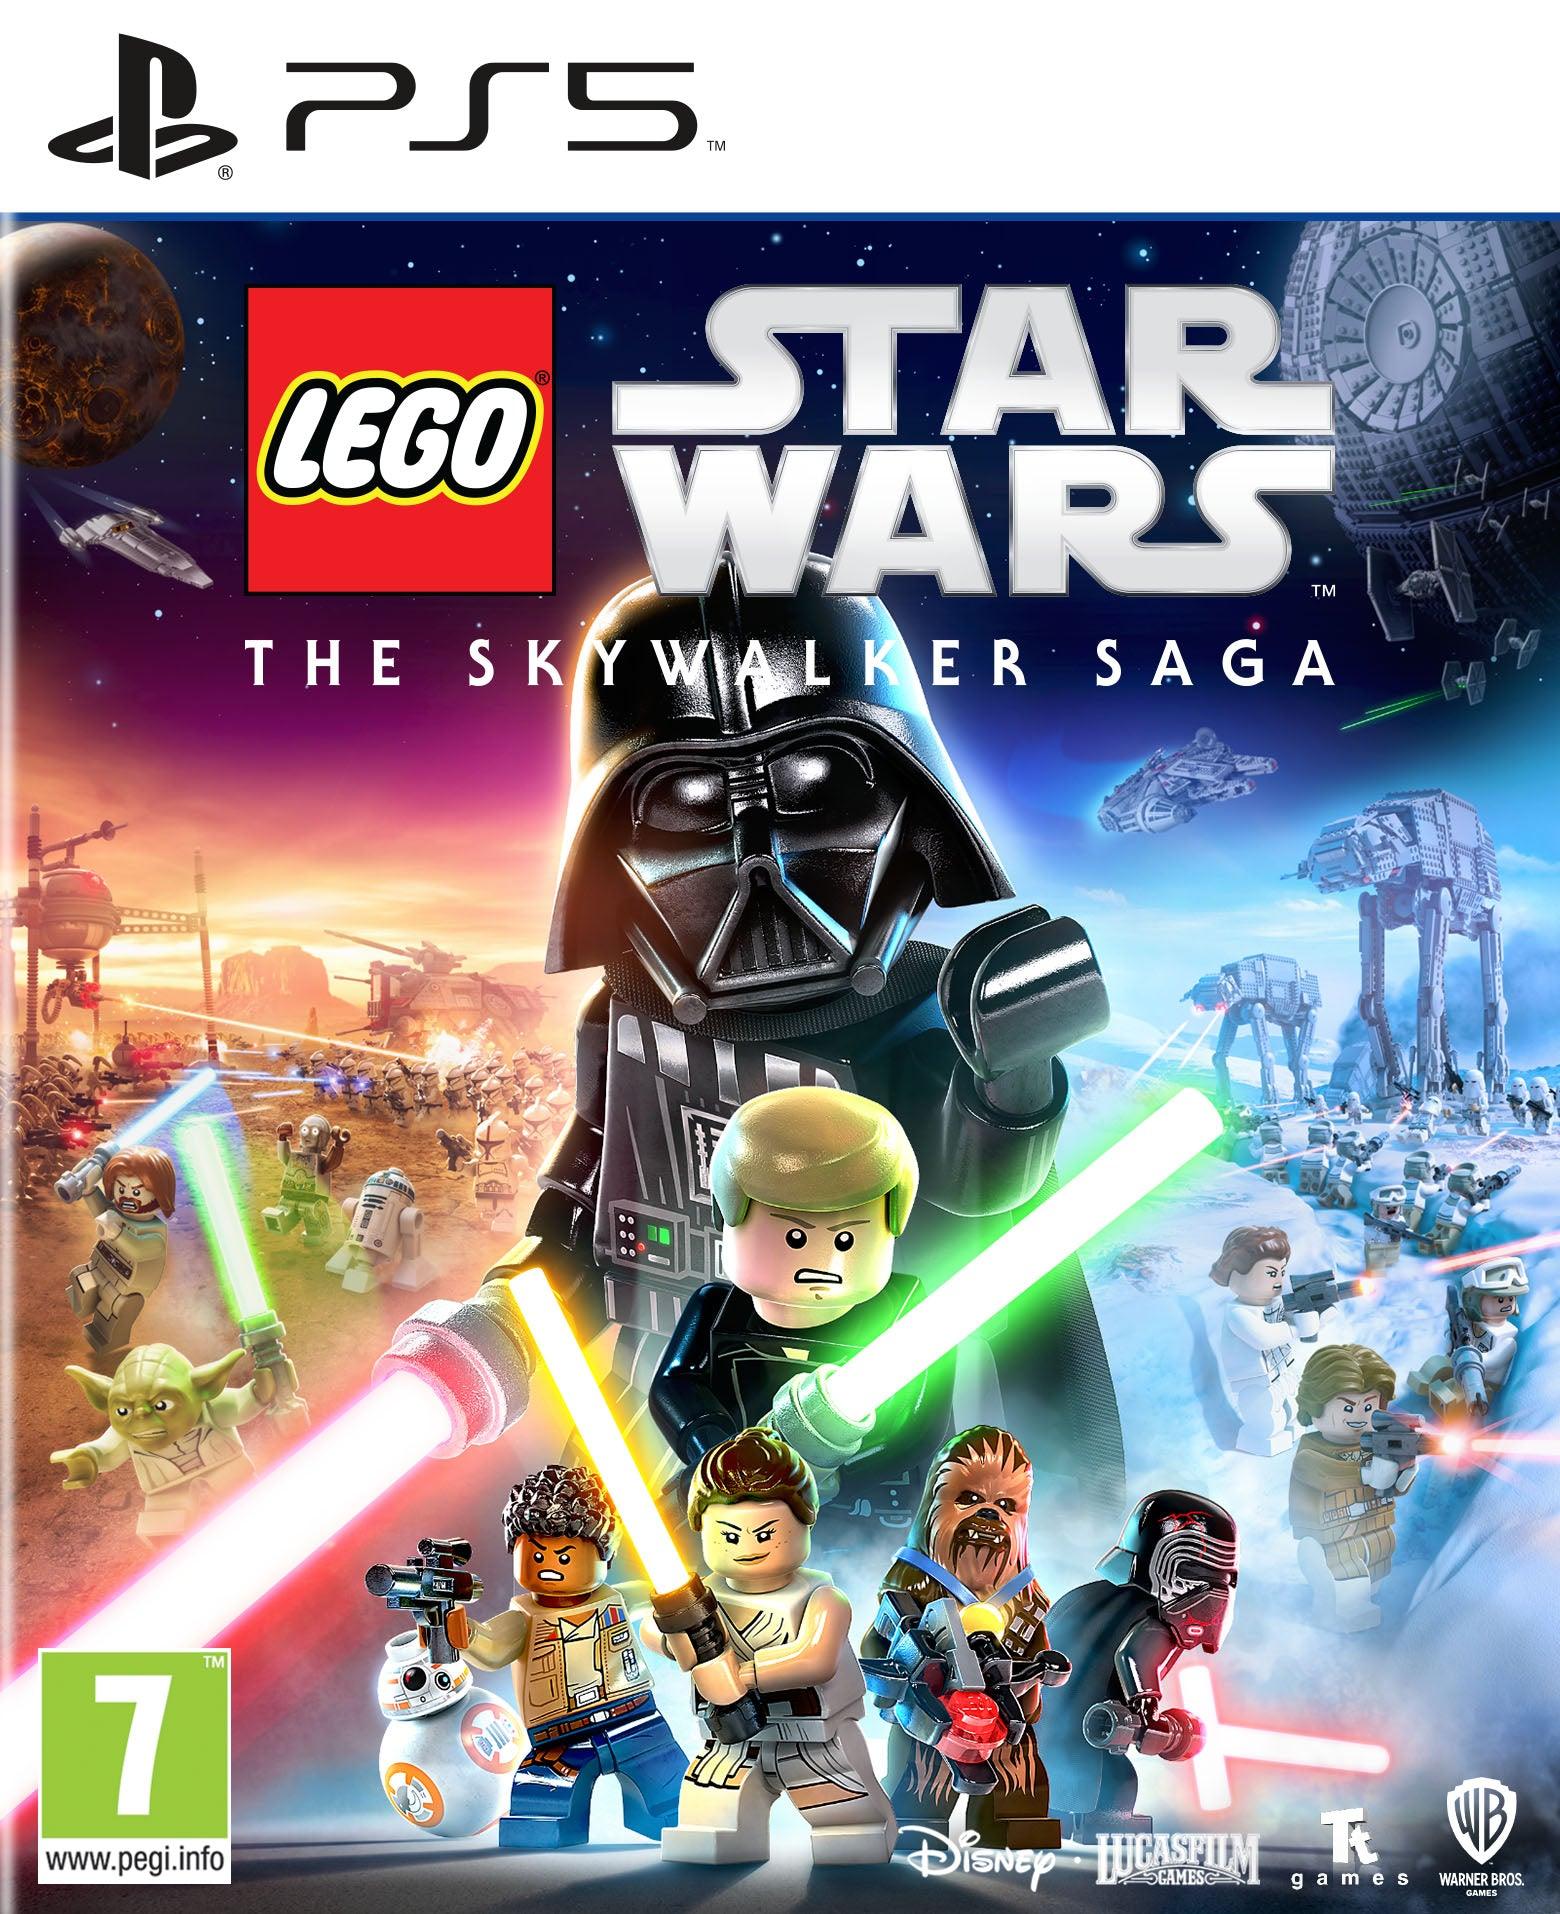 Lego Star Wars Skywalker Saga - Want a New Gadget